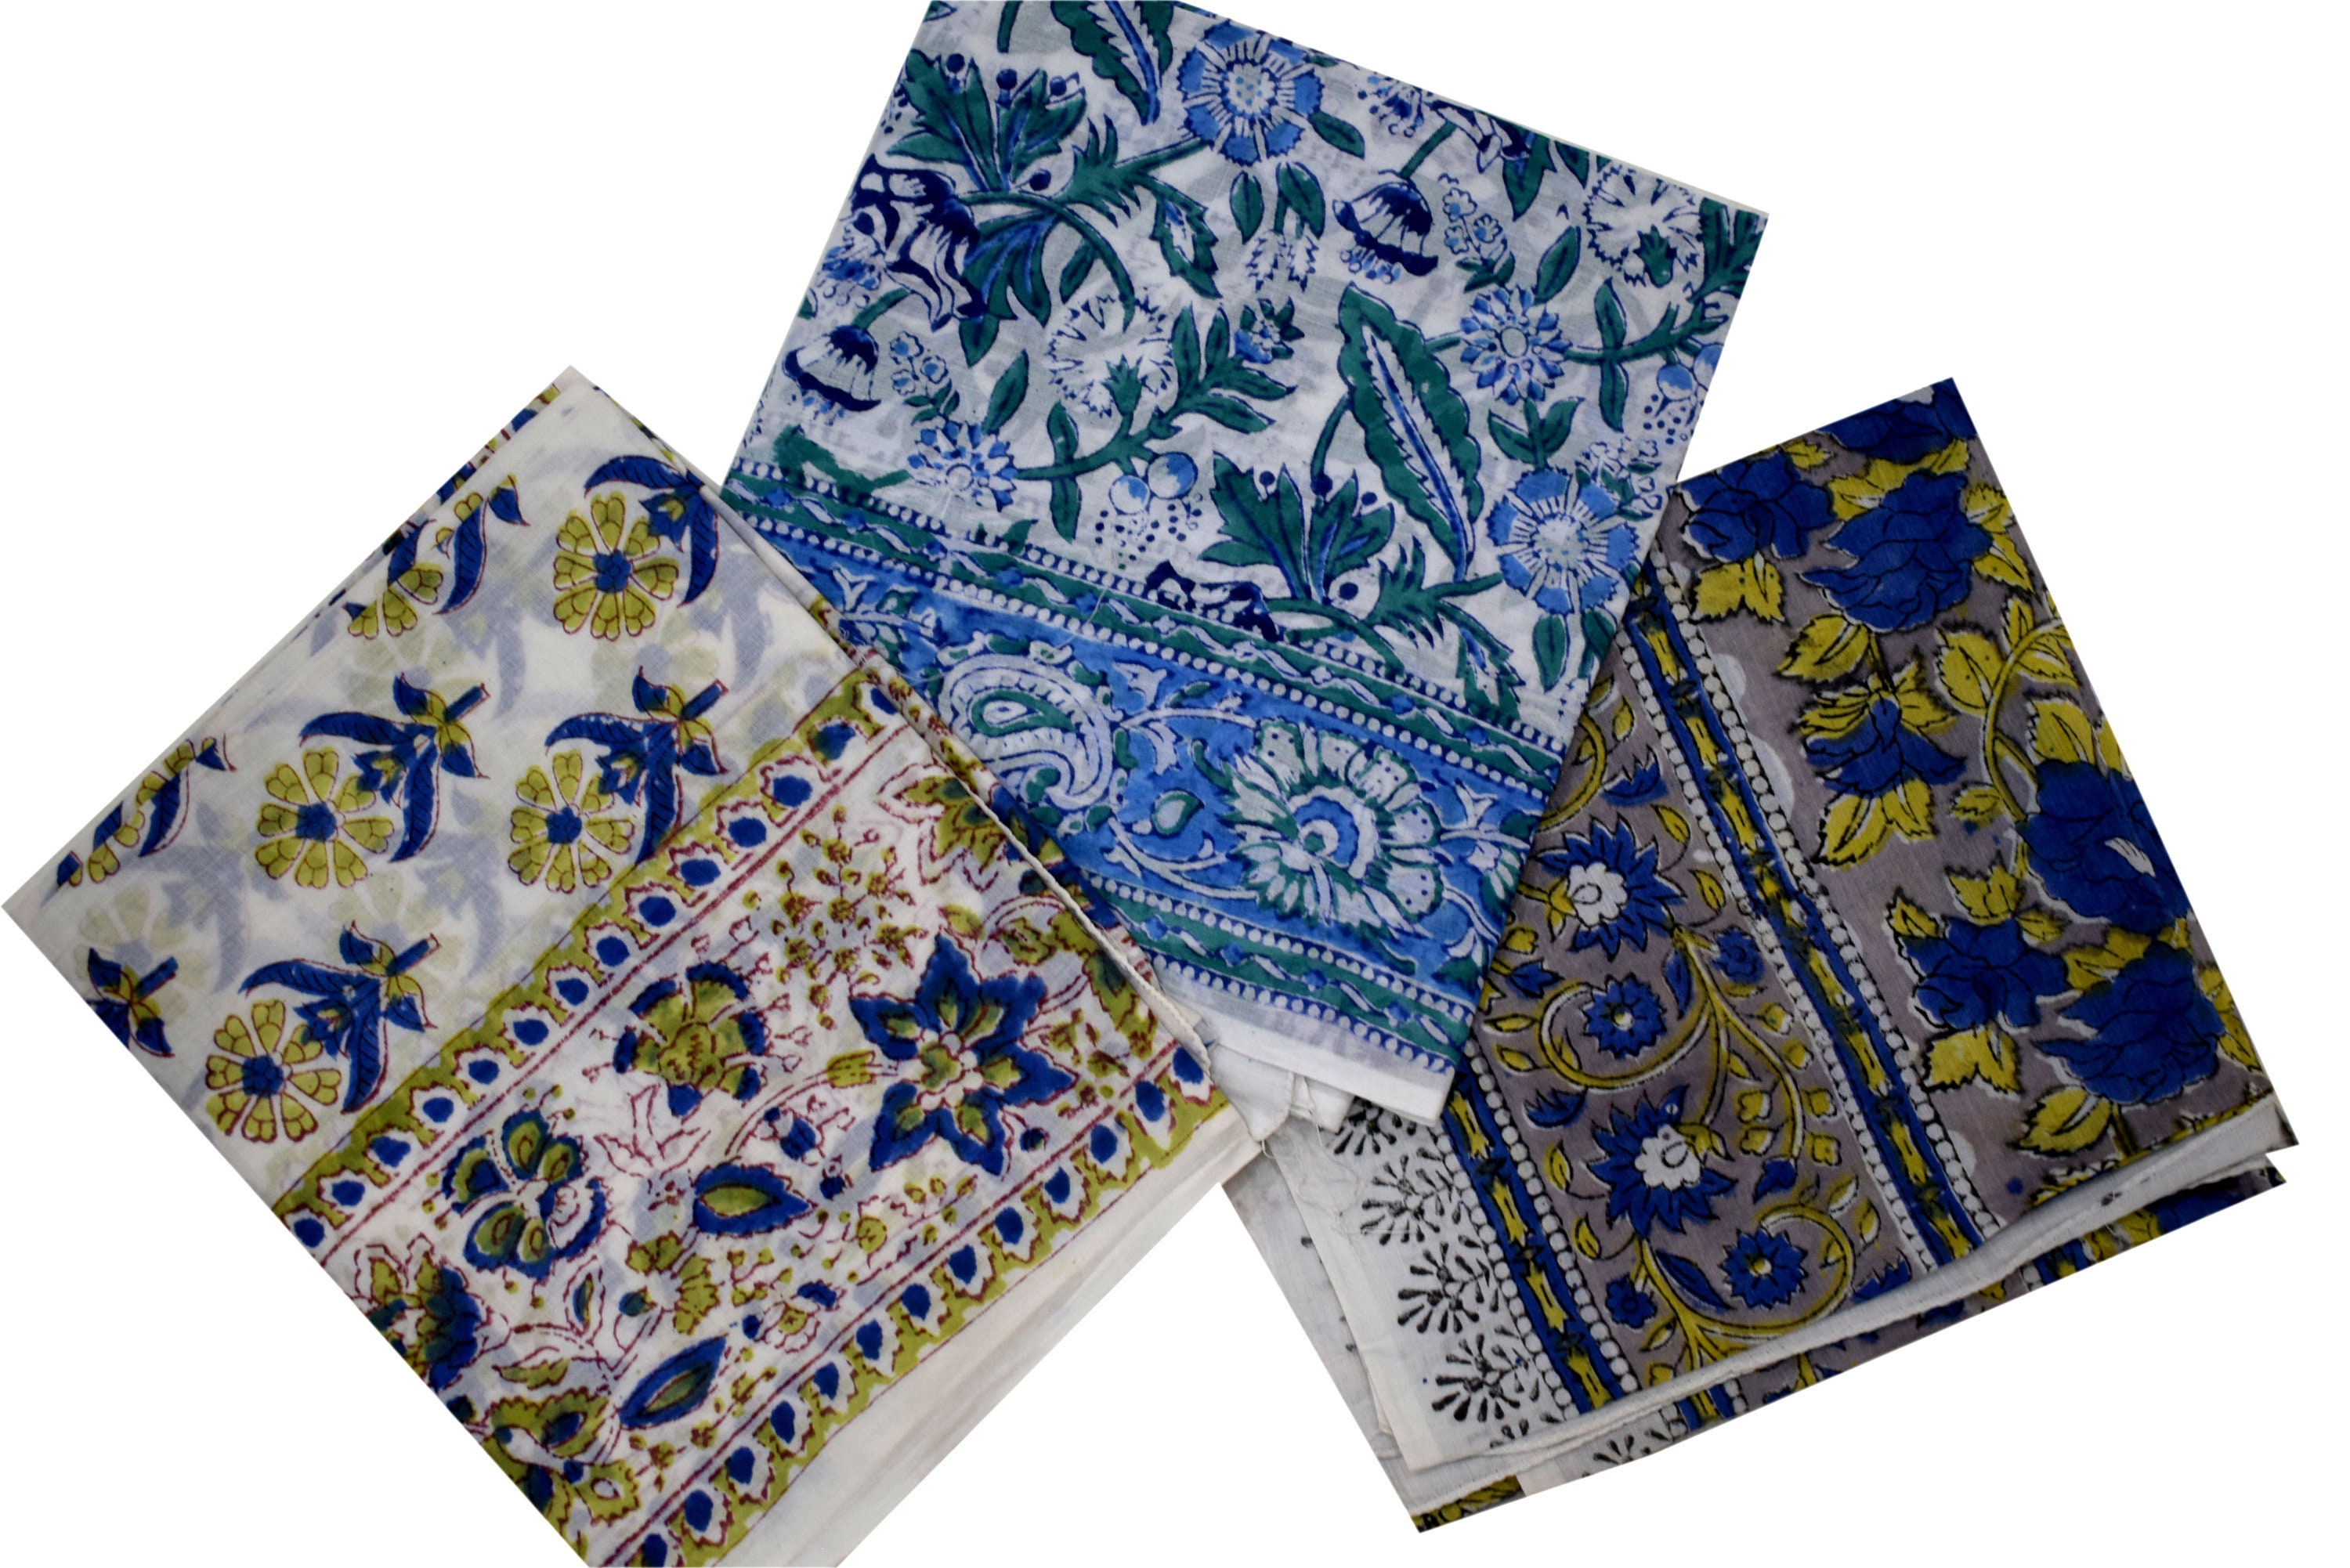 Lot of 3 Handmade block print natural dye sarong cotton floral print scarf handblock print with natural plant based dye  pareo.